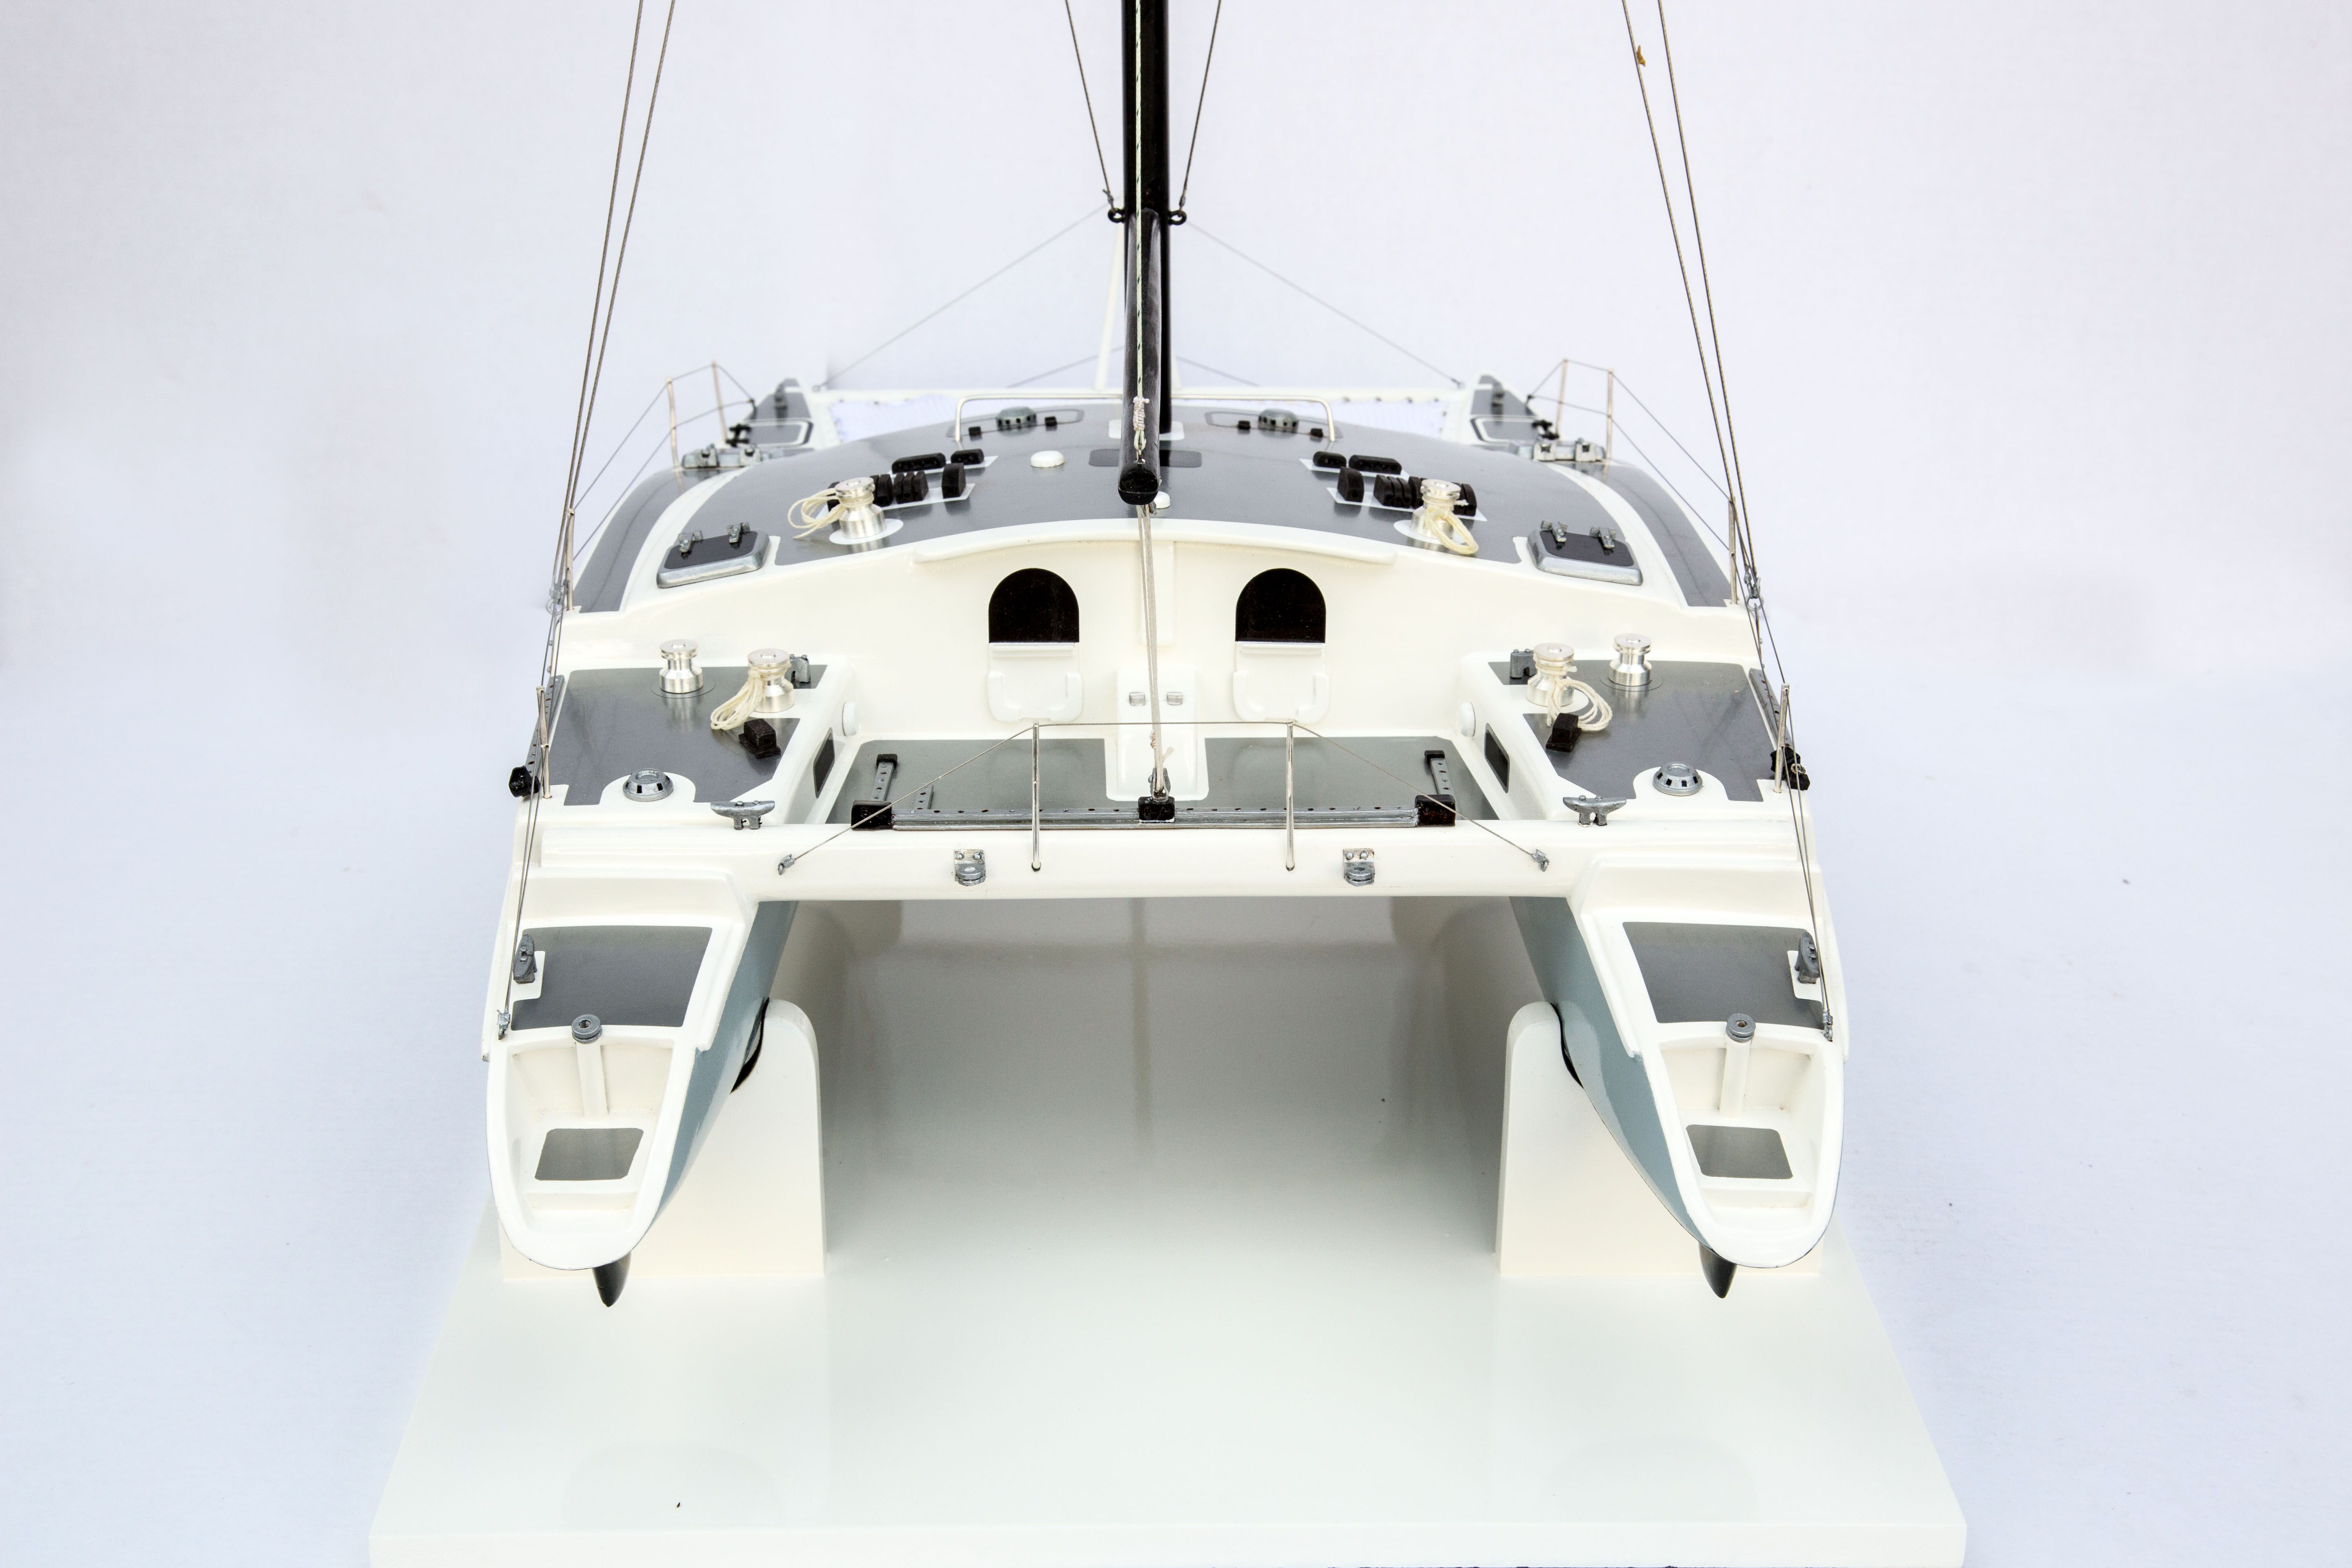 Cite D'Aleth Catamaran Model - HM